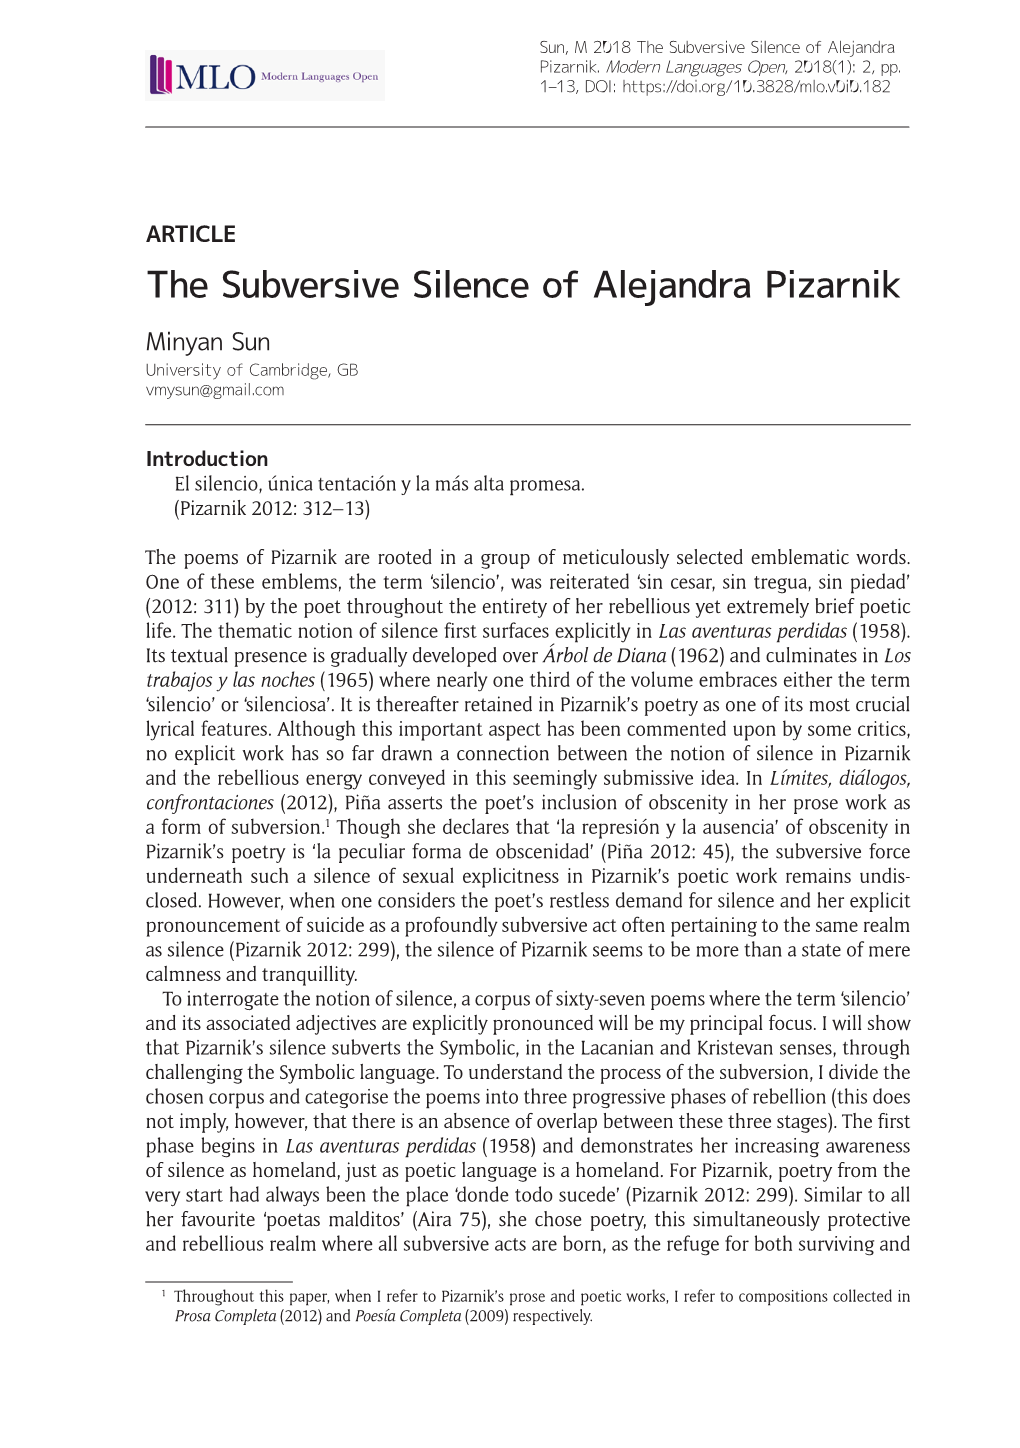 The Subversive Silence of Alejandra Pizarnik